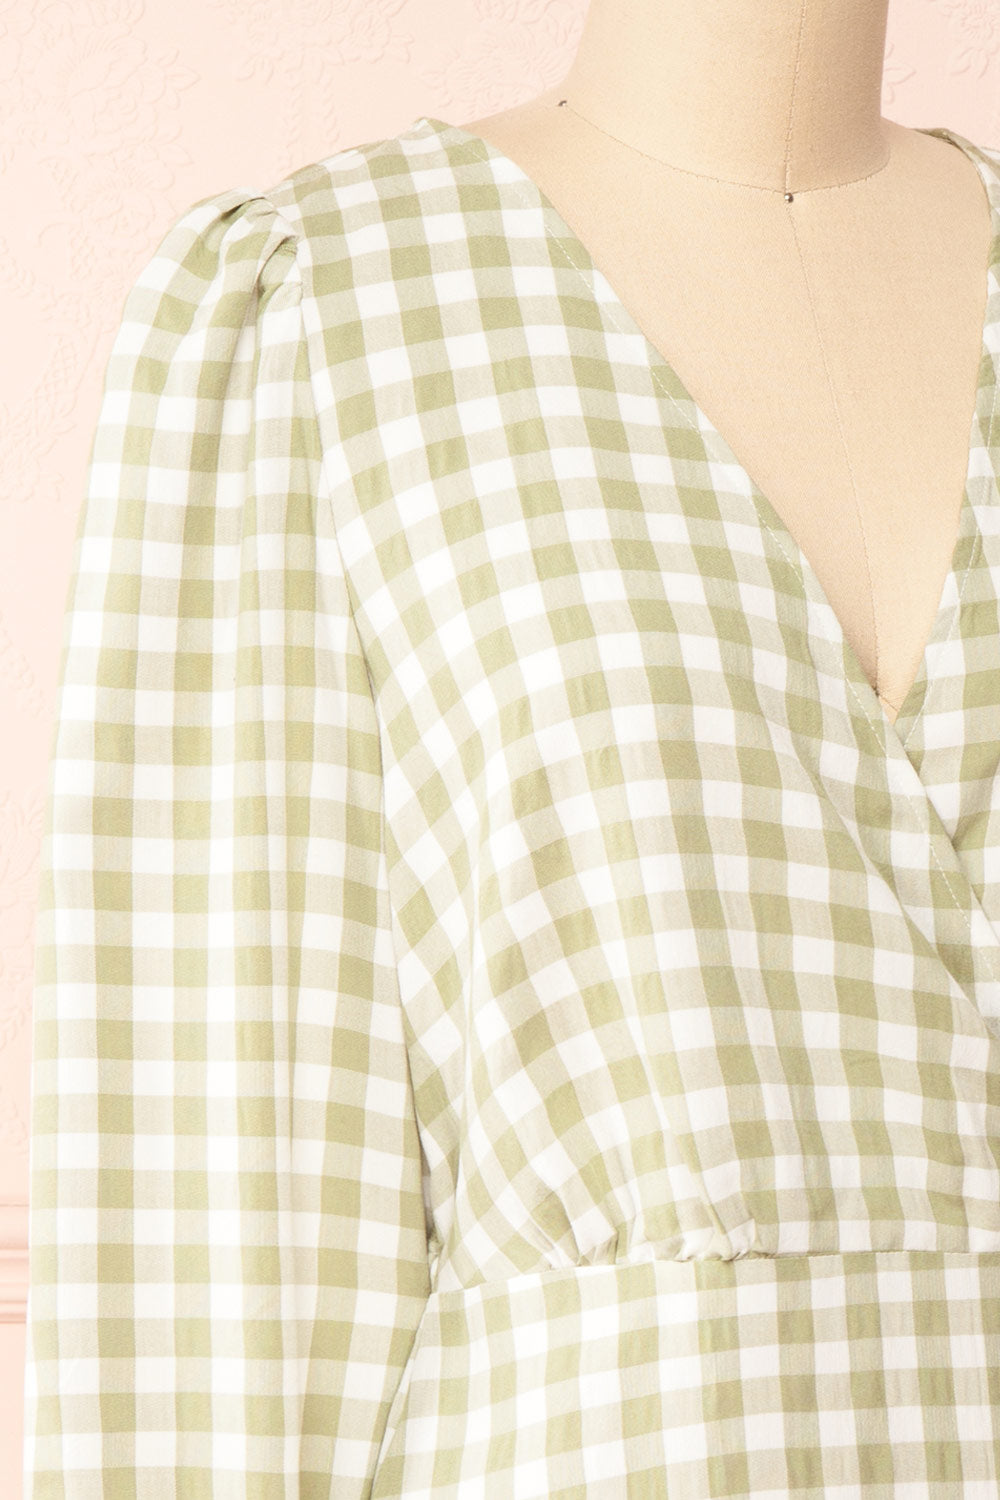 Grutha Green Long Sleeve Short Gingham Dress w/ Ruffles | Boutique 1861 side close-up